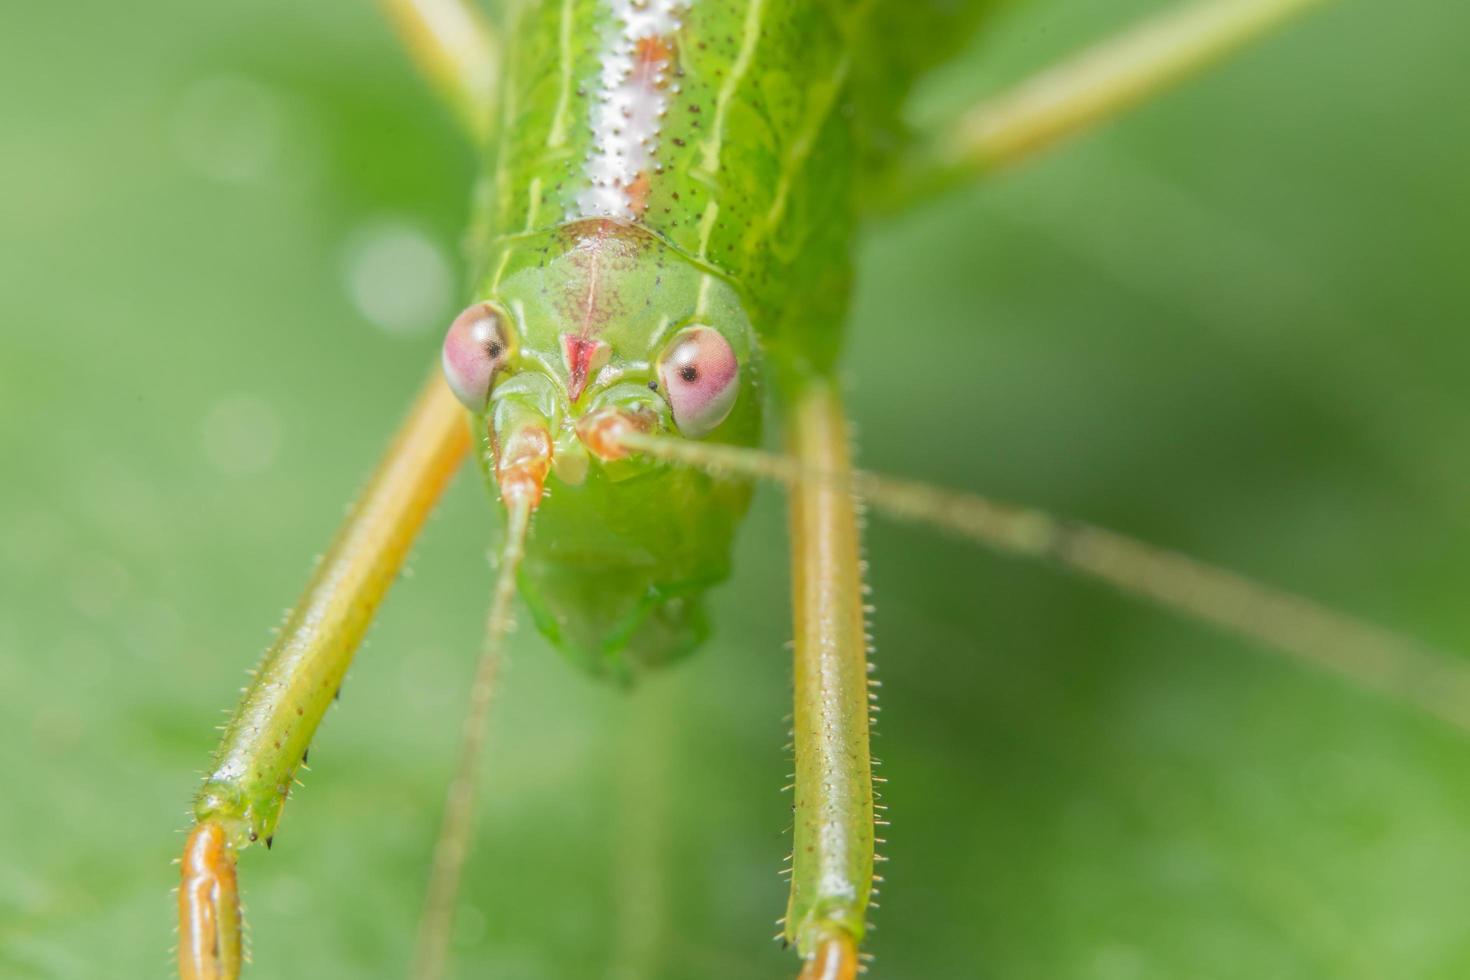 Grasshopper on a leave photo